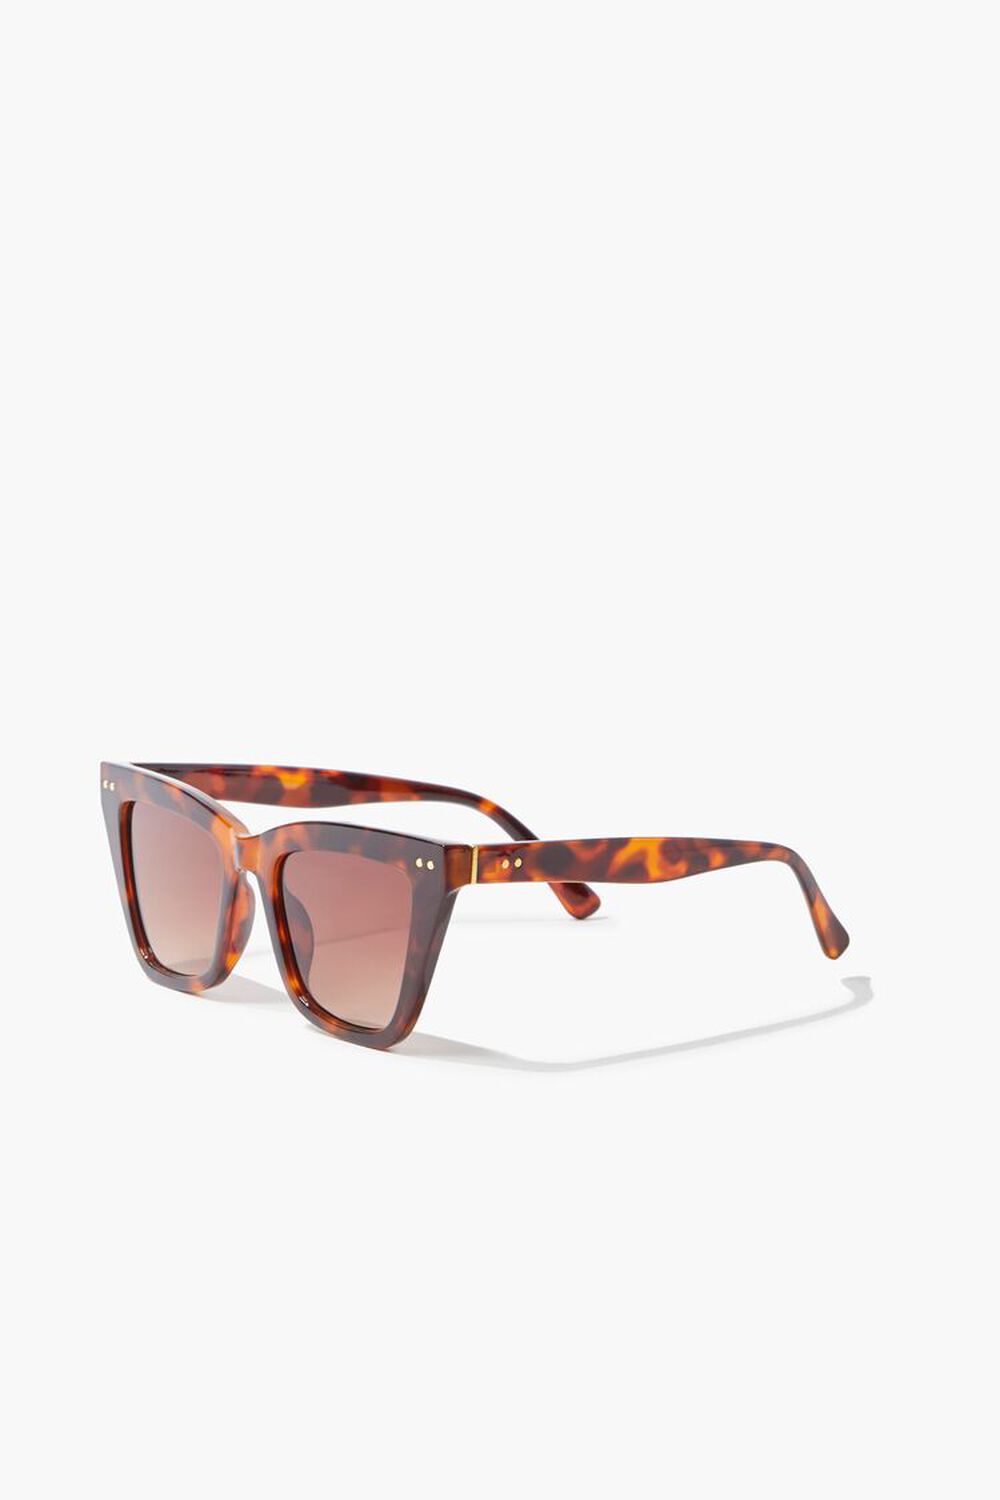 Tortoiseshell Square Sunglasses, image 2